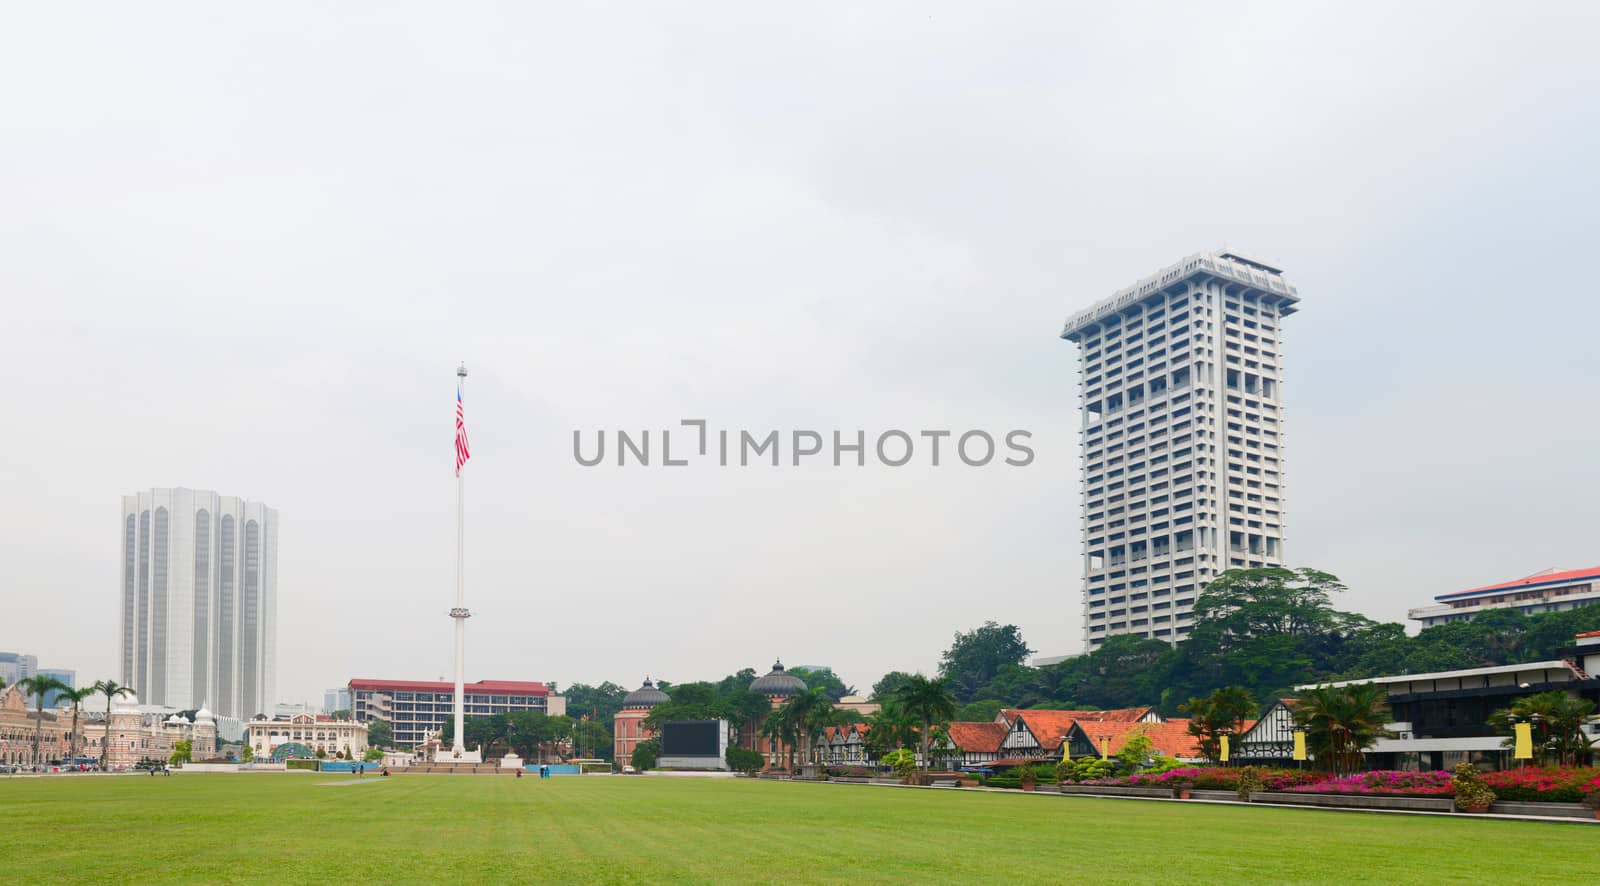 Merdeka Square (Independence Square) in Kuala Lumpur, Malaysia. 